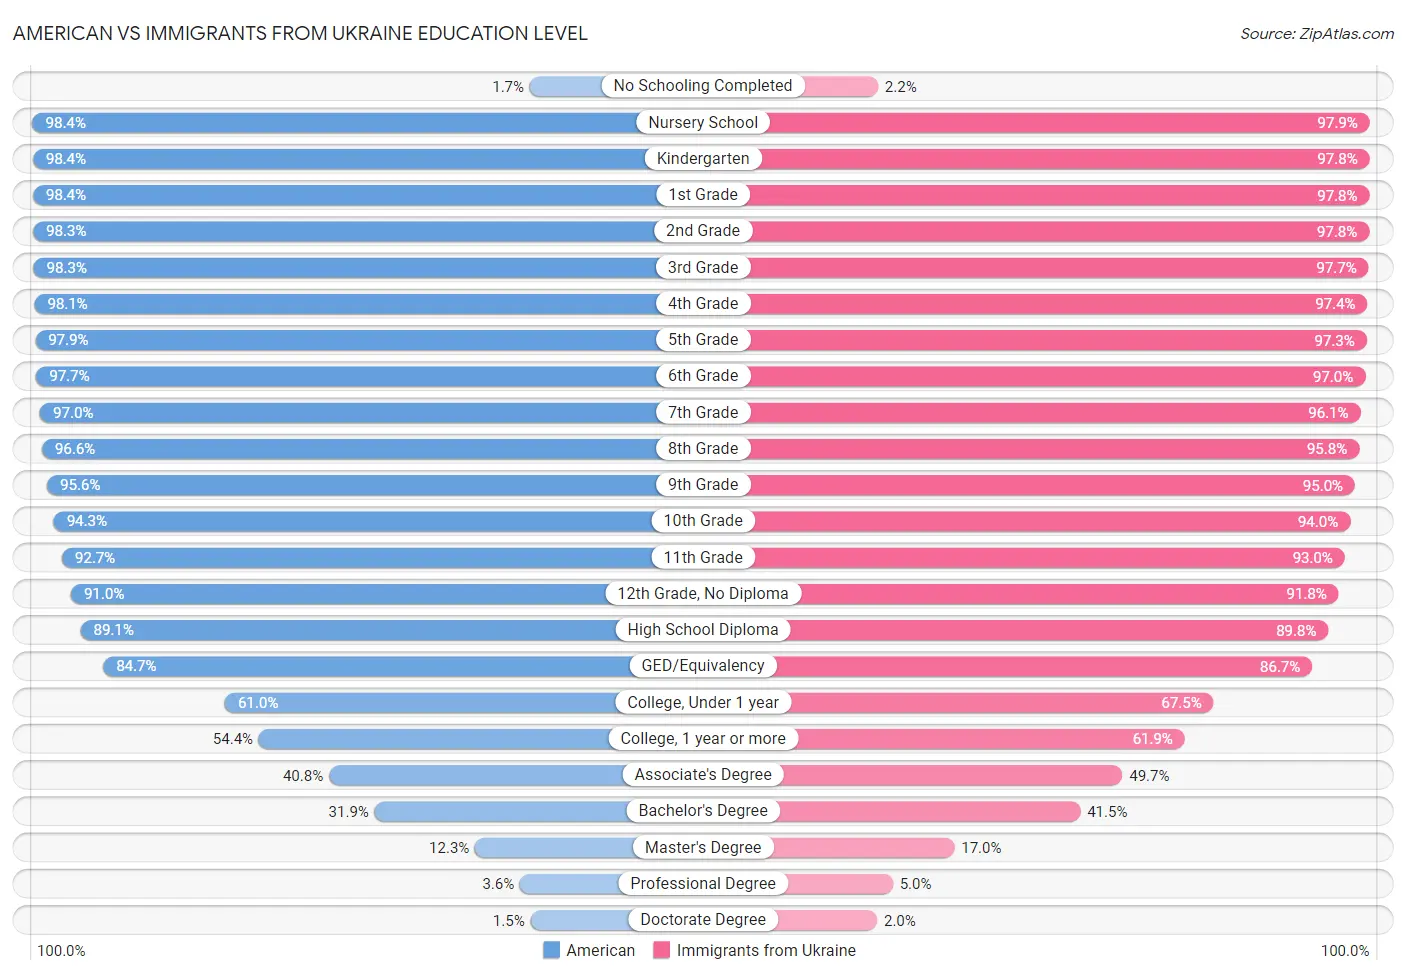 American vs Immigrants from Ukraine Education Level